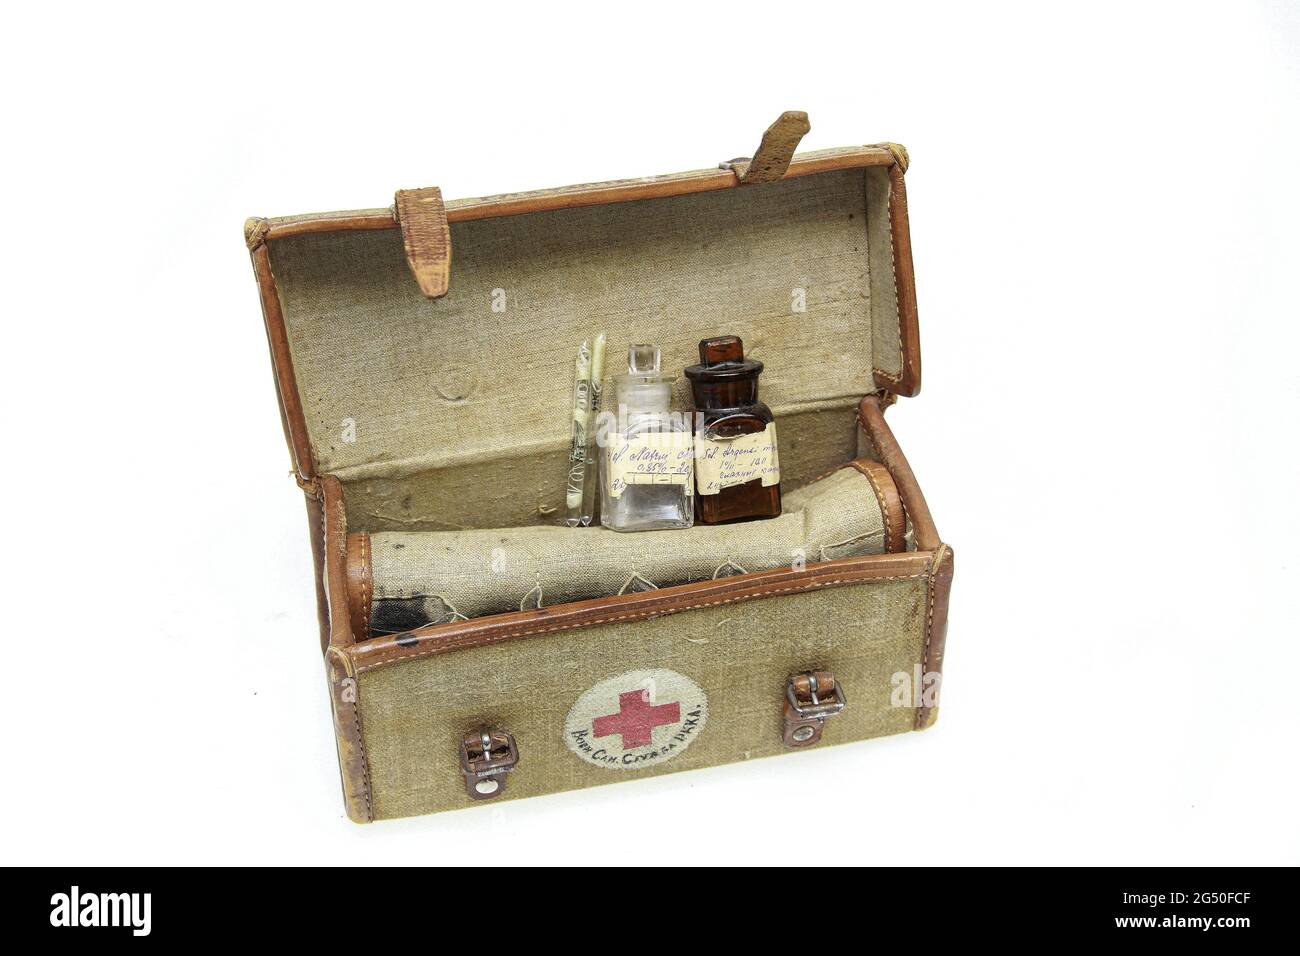 Soviet first aid kit, Vintage pill organizer, Medicine kit with